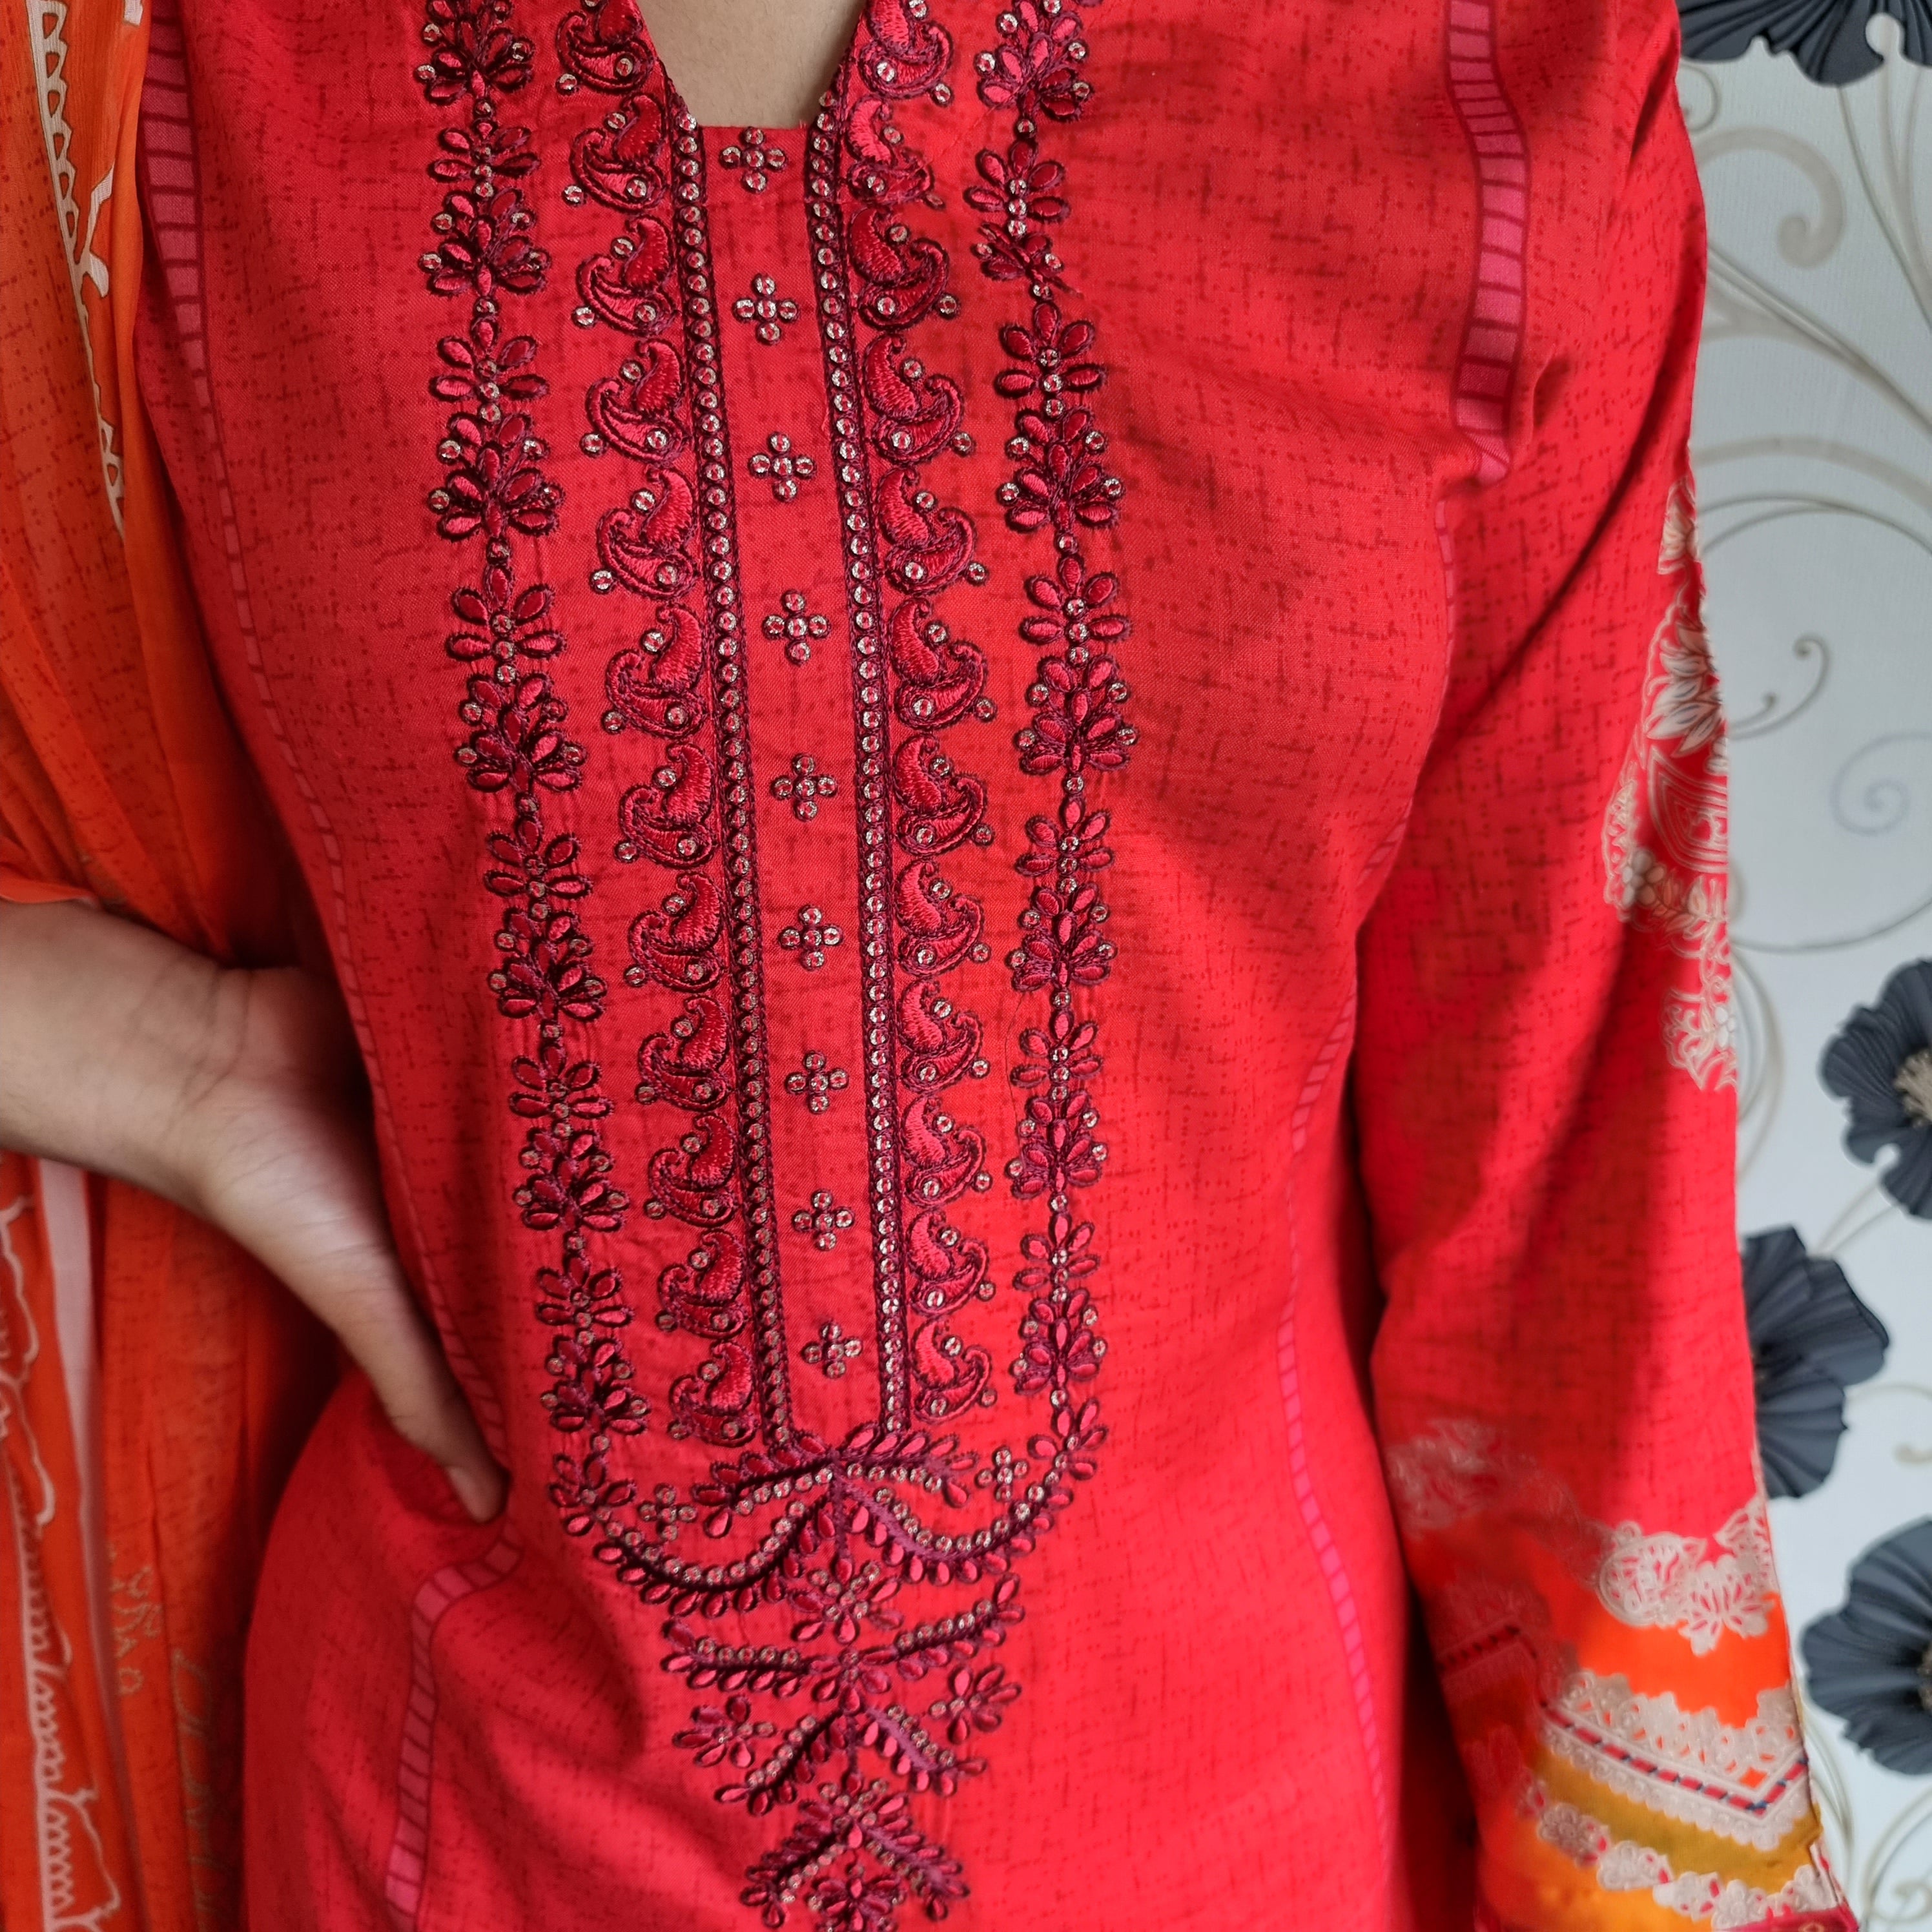 SEHRIARAZ Pakistani Salwar Kameez Ladies Ready Made Asian Indian Shalwar outfit RED